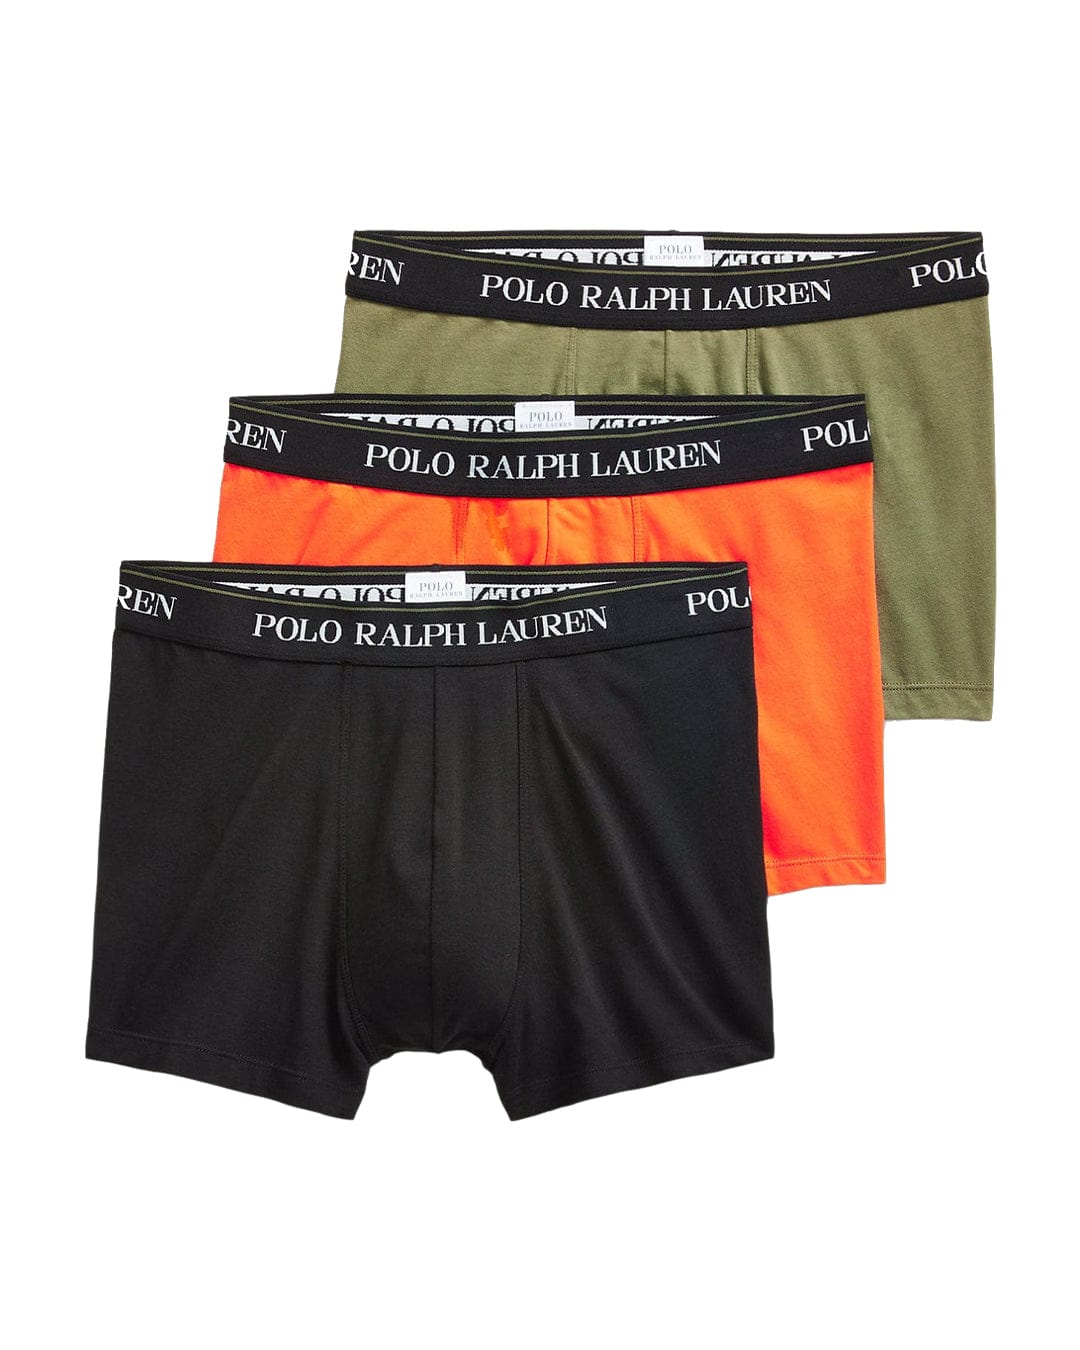 Polo Ralph Lauren Underwear Polo Ralph Lauren Army Green, Orange And Black Three-Pack Trunks